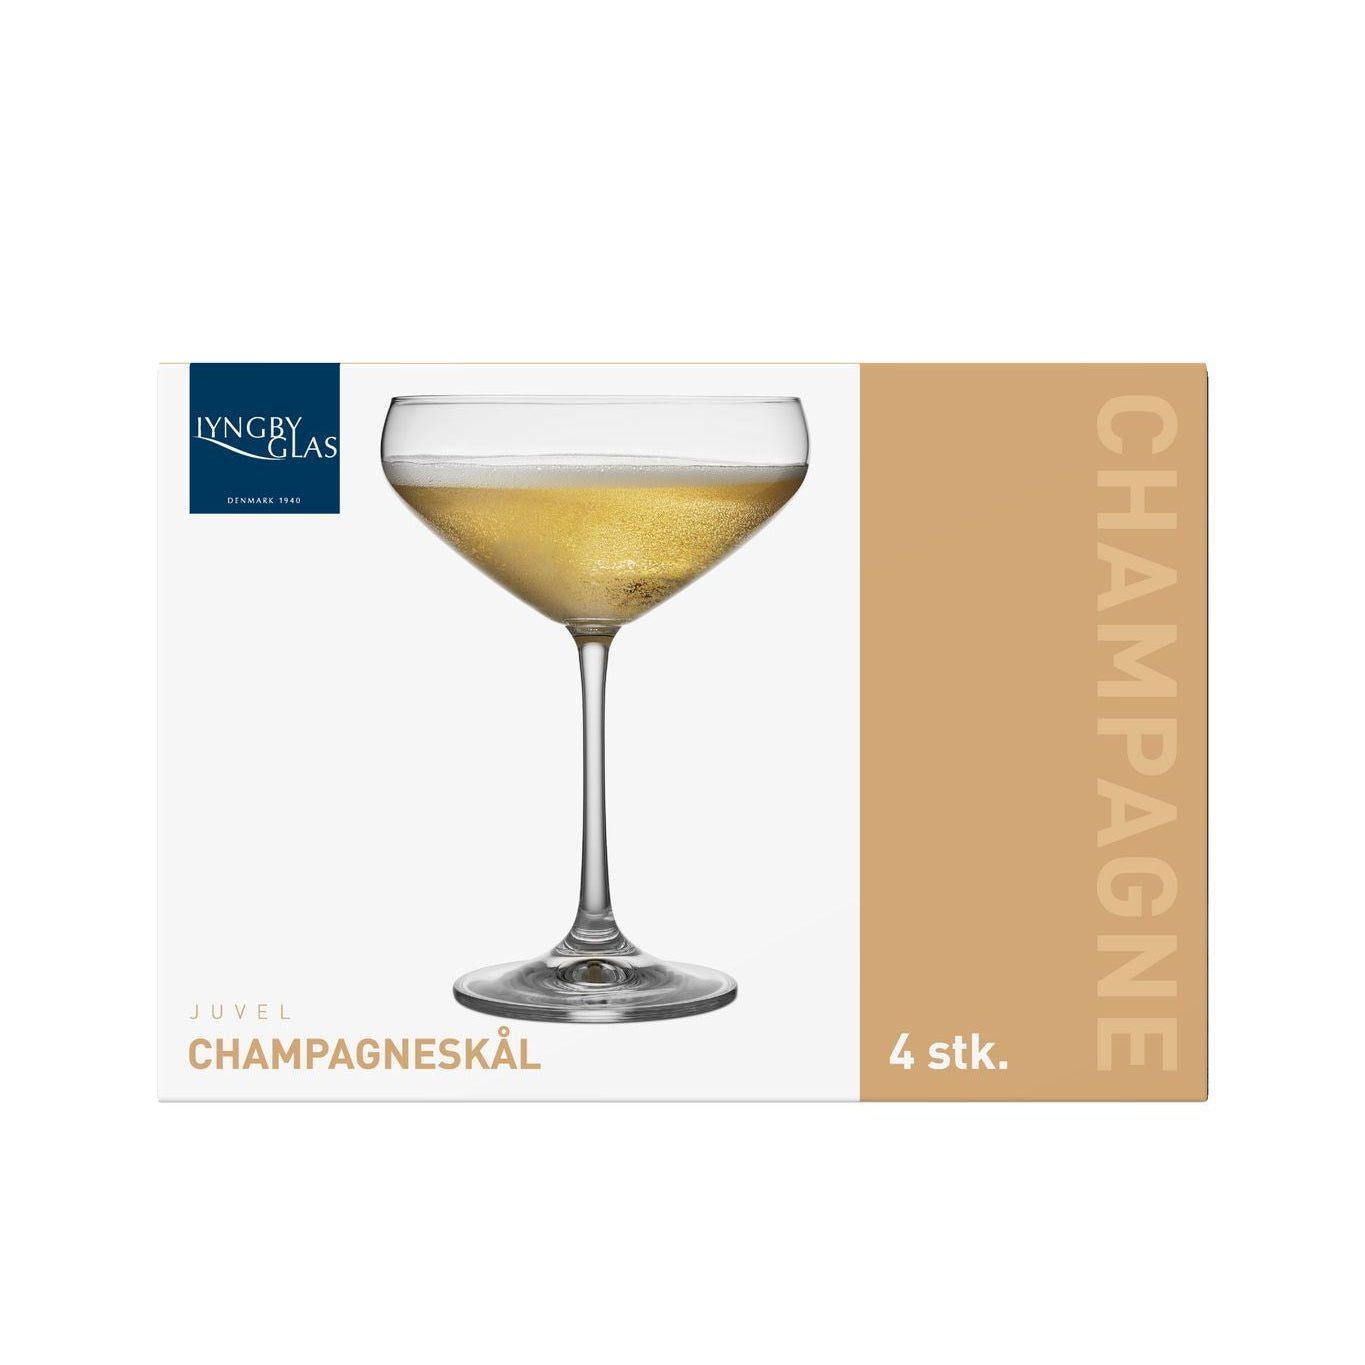 Lyngby Glas Juvel Champagne Bowl 34 Cl, 4 szt.